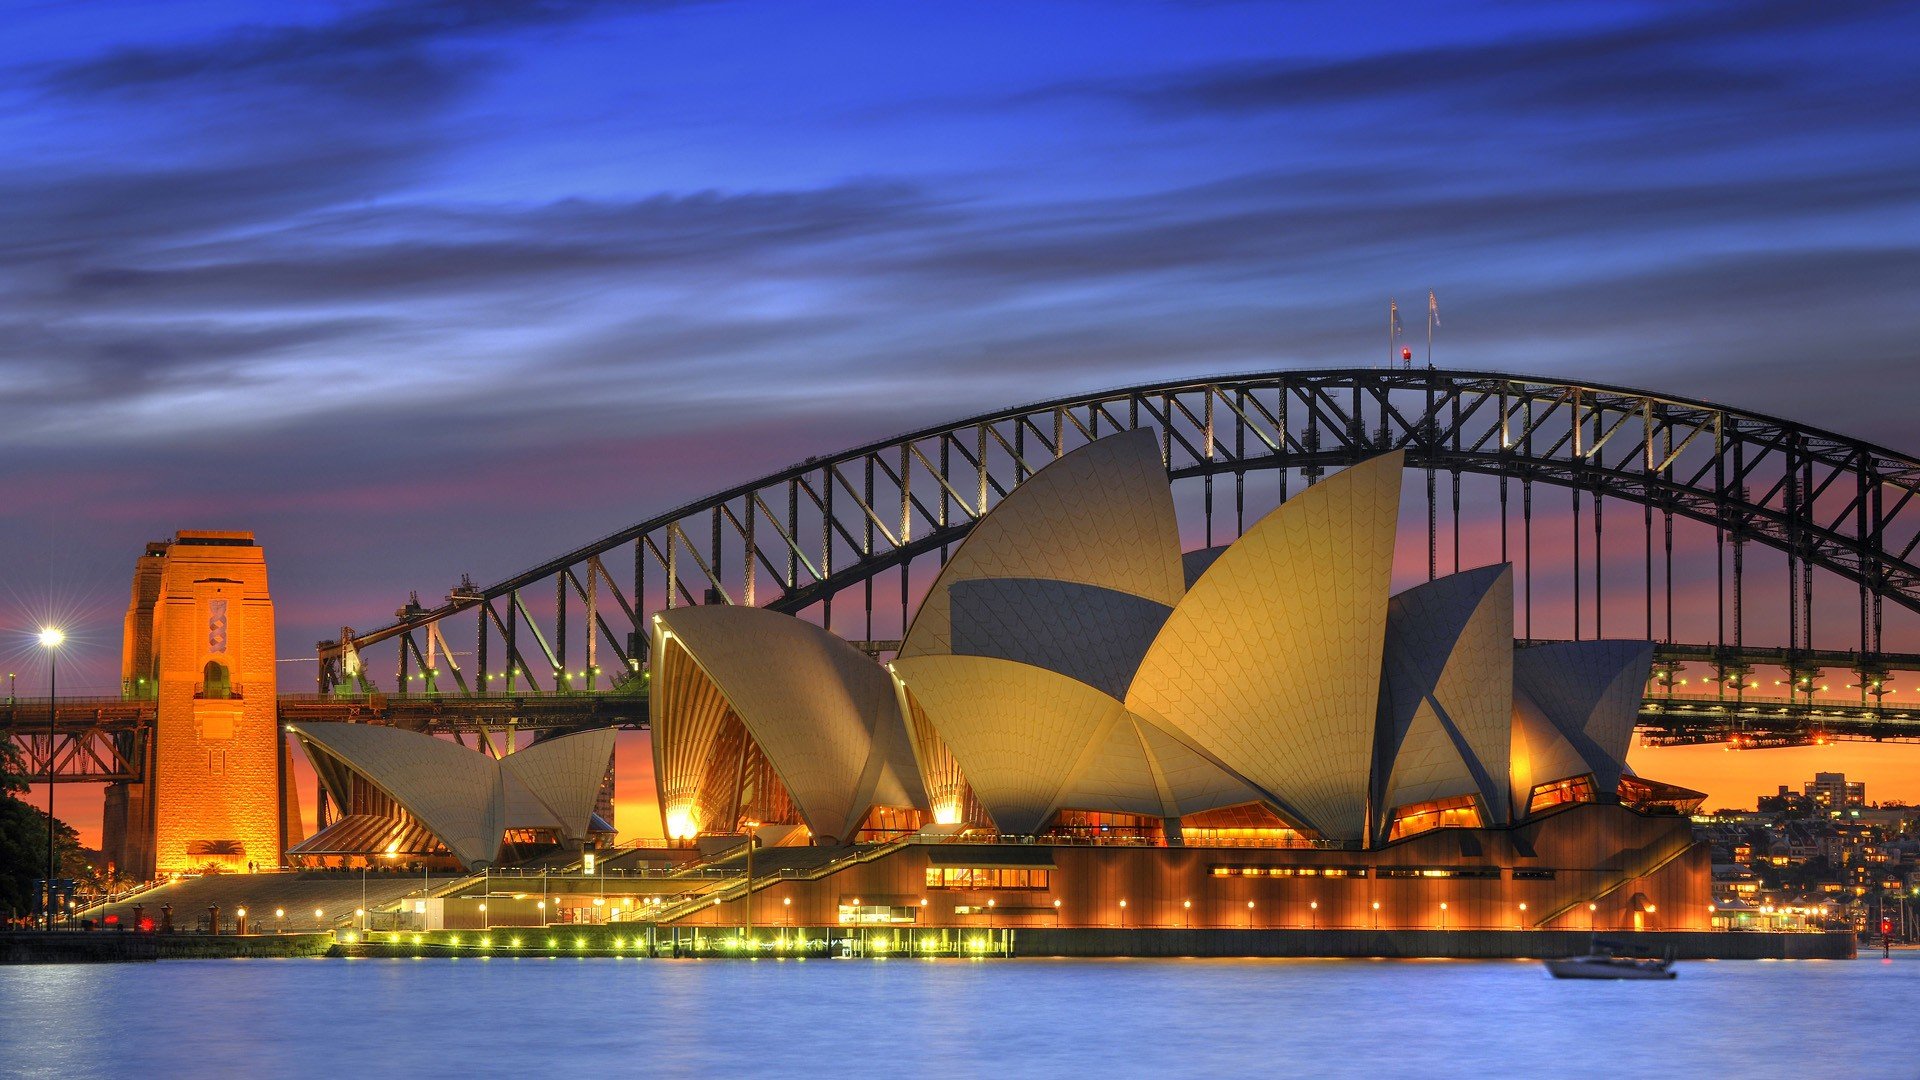 Most australians. Сиднейский мост Харбор-бридж. Сиднейский оперный театр и Харбор-бридж. Харбор-бридж (Сидней, Австралия). Австралия мост Харбор бридж (г. Сидней).